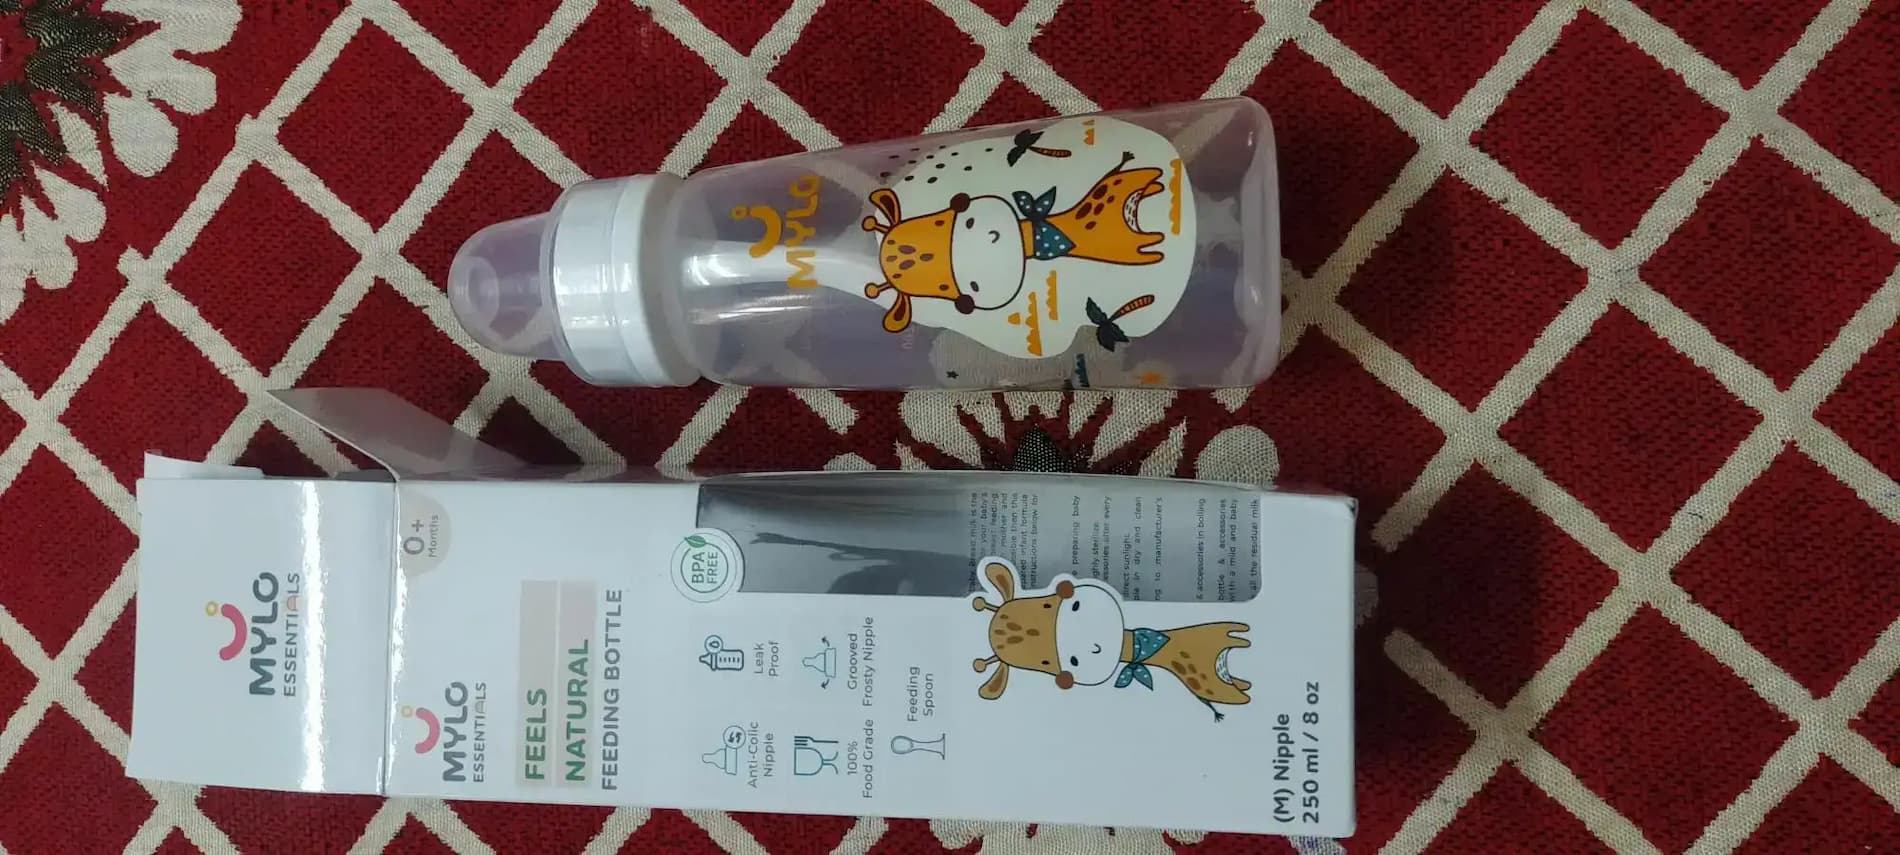 2-in-1 Baby Feeding Bottle | BPA Free with Anti-Colic Nipple & Spoon | Easy Flow Neck Design - Pink & Elephant 125ml & 250ml